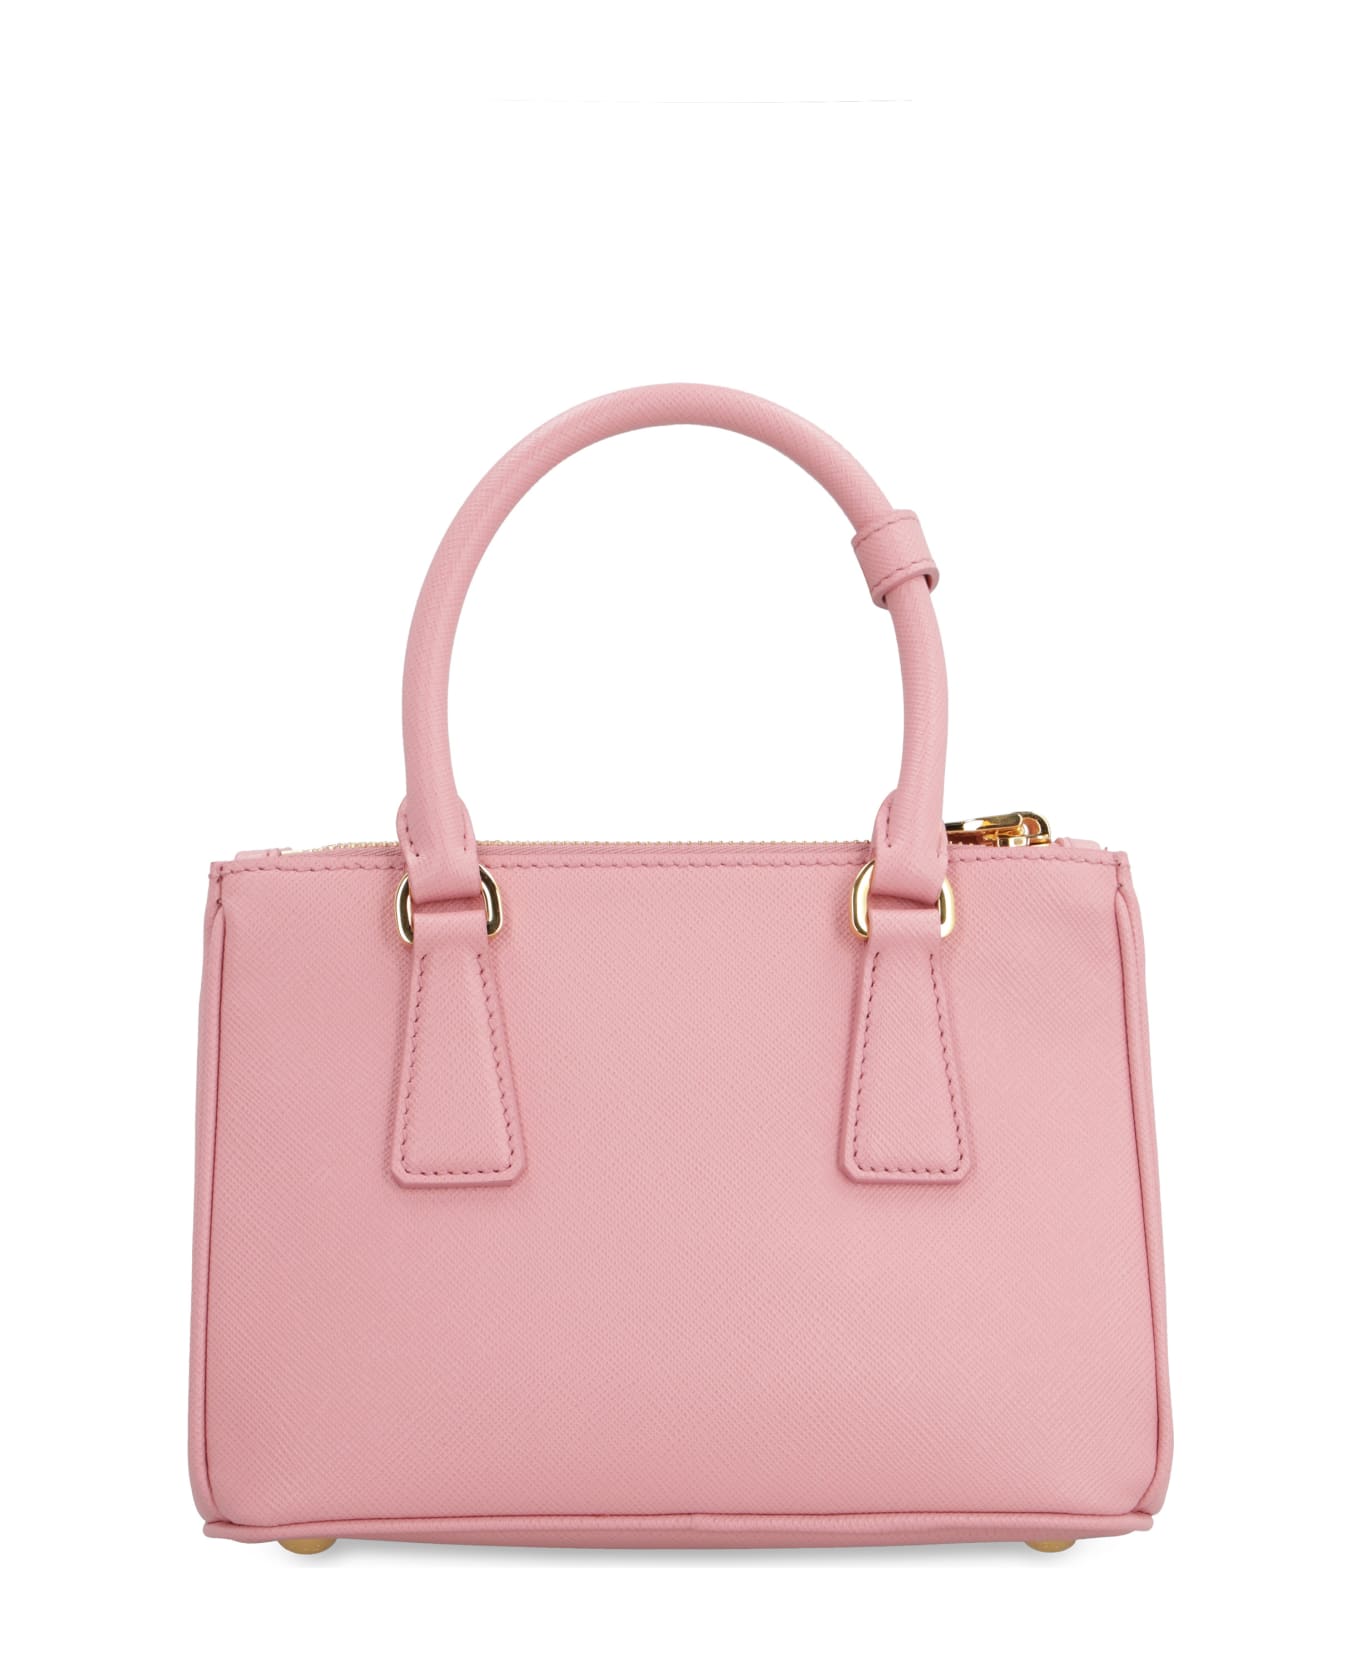 Prada Galleria Handbag - Pink